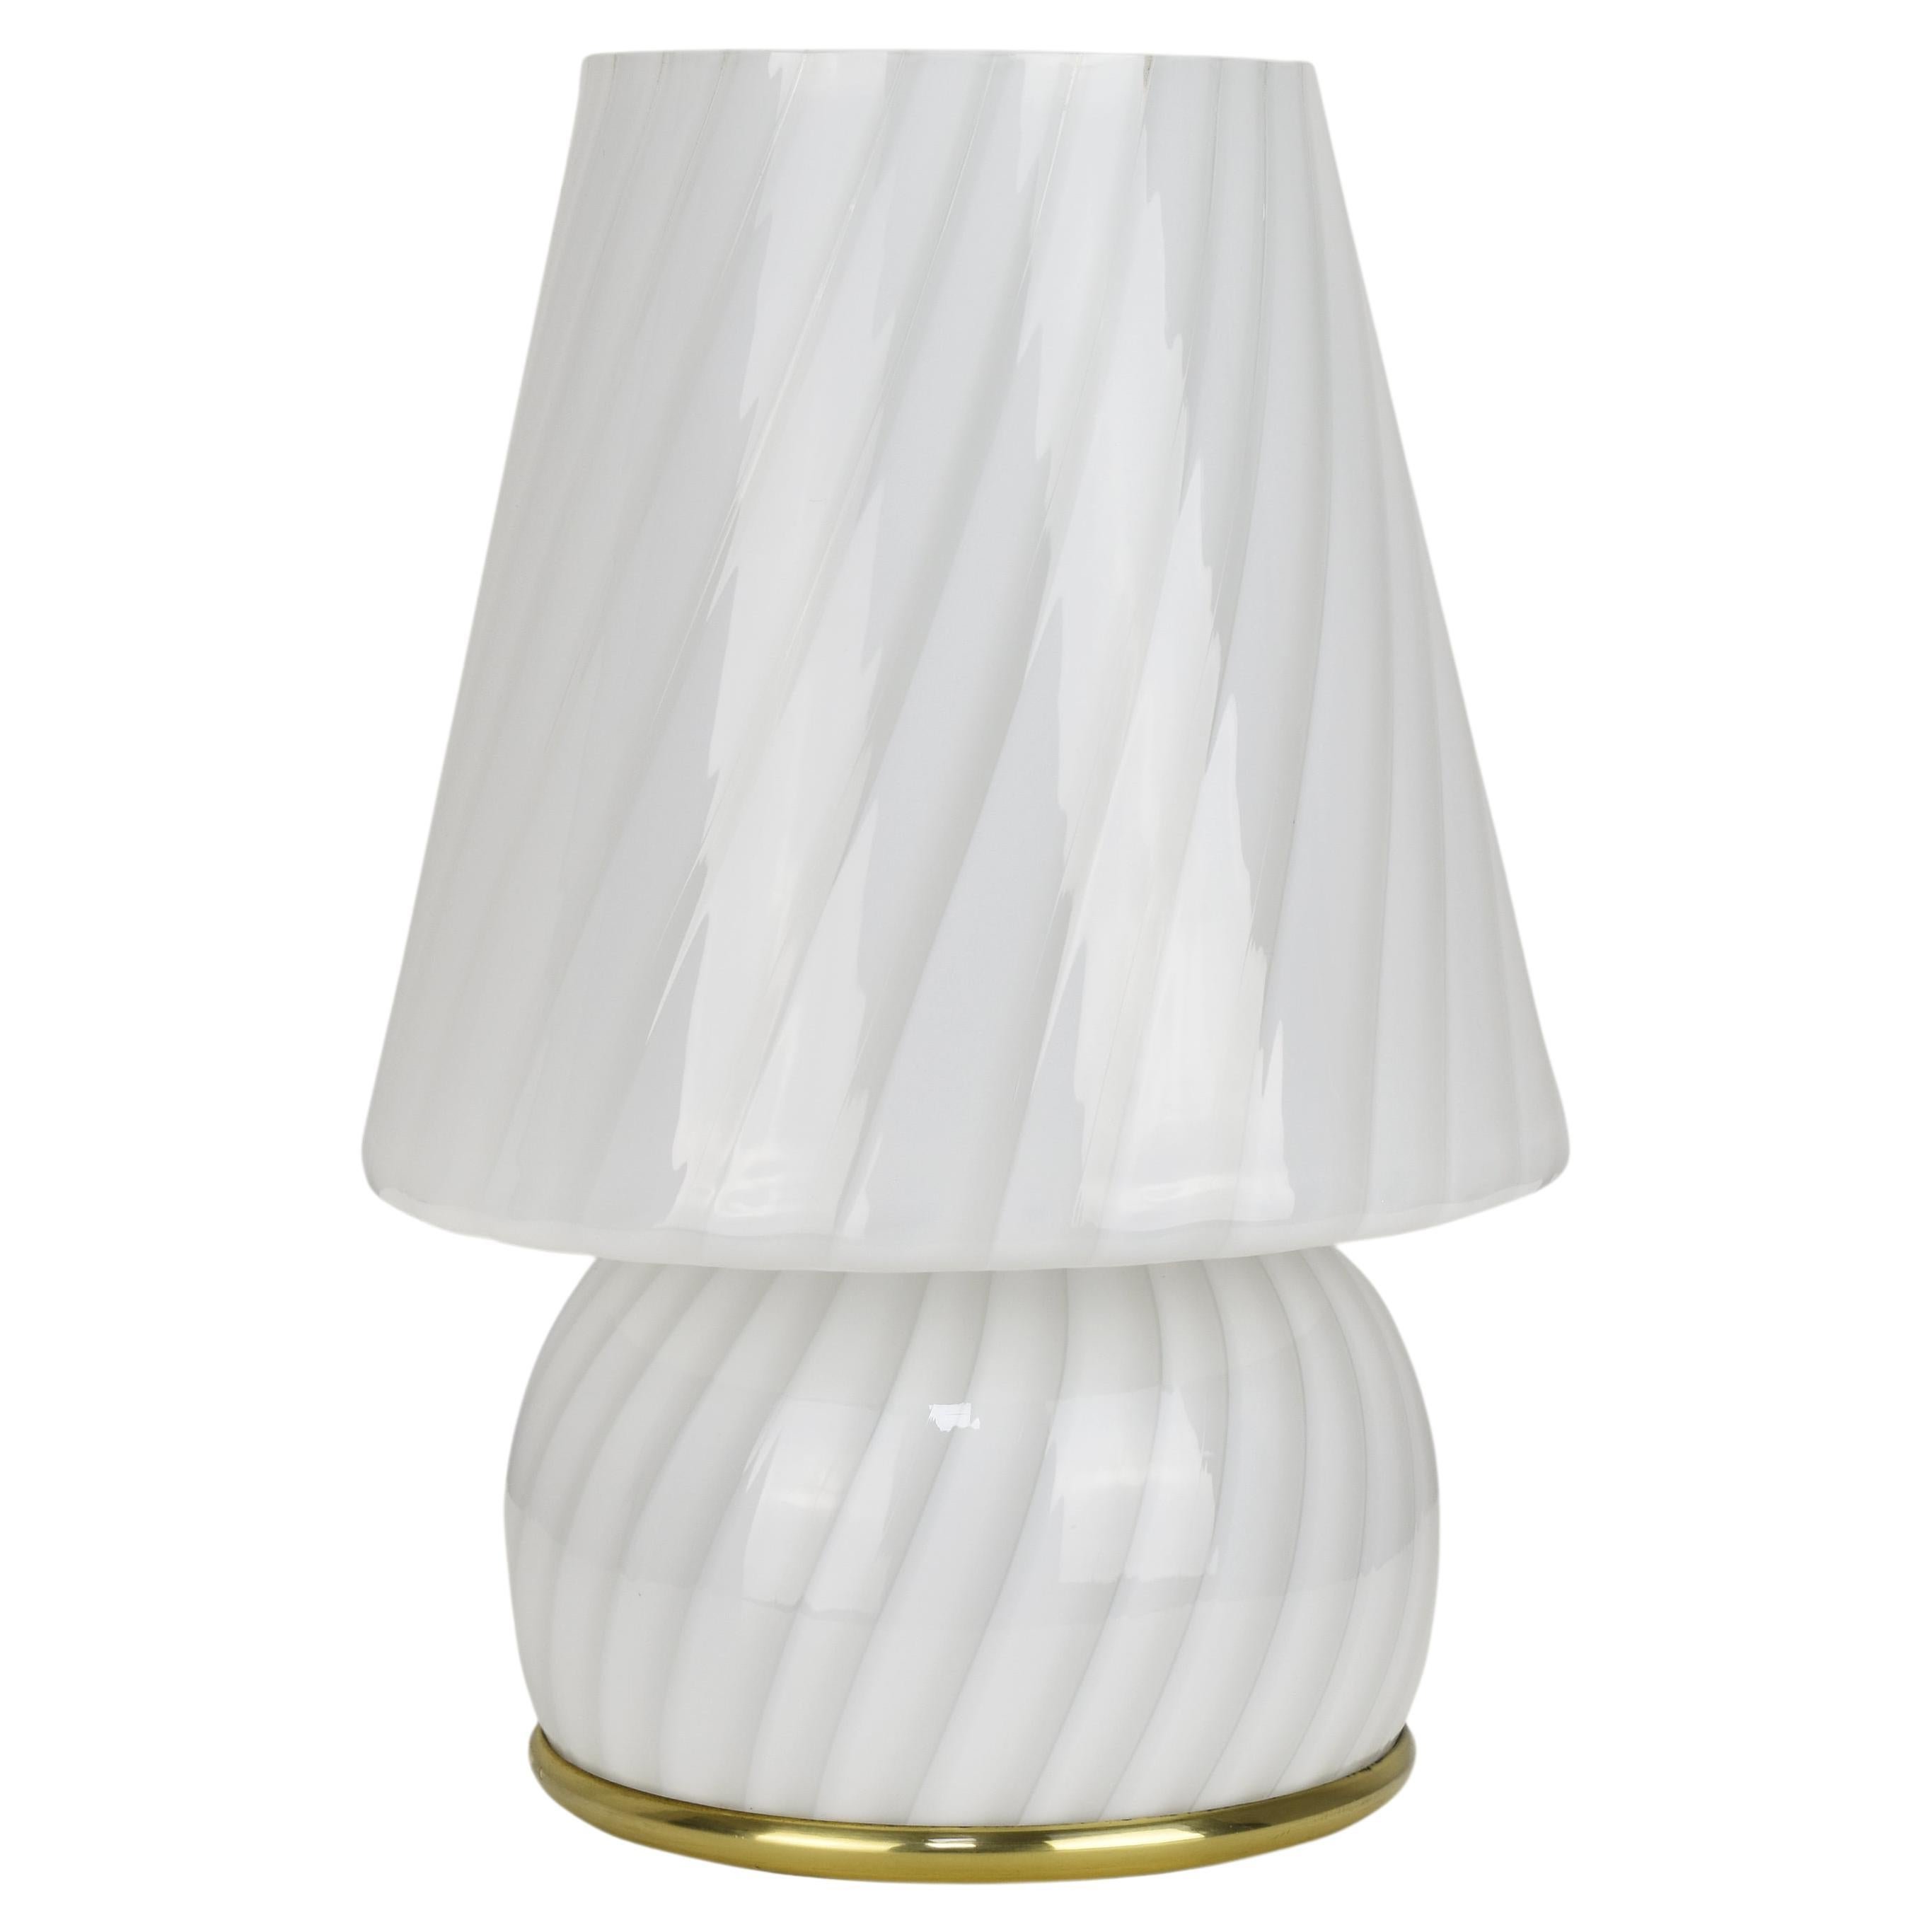 Midcentury White Murano Glass and Brass Italian Mushroom-Shaped Table Lamp 1960s For Sale